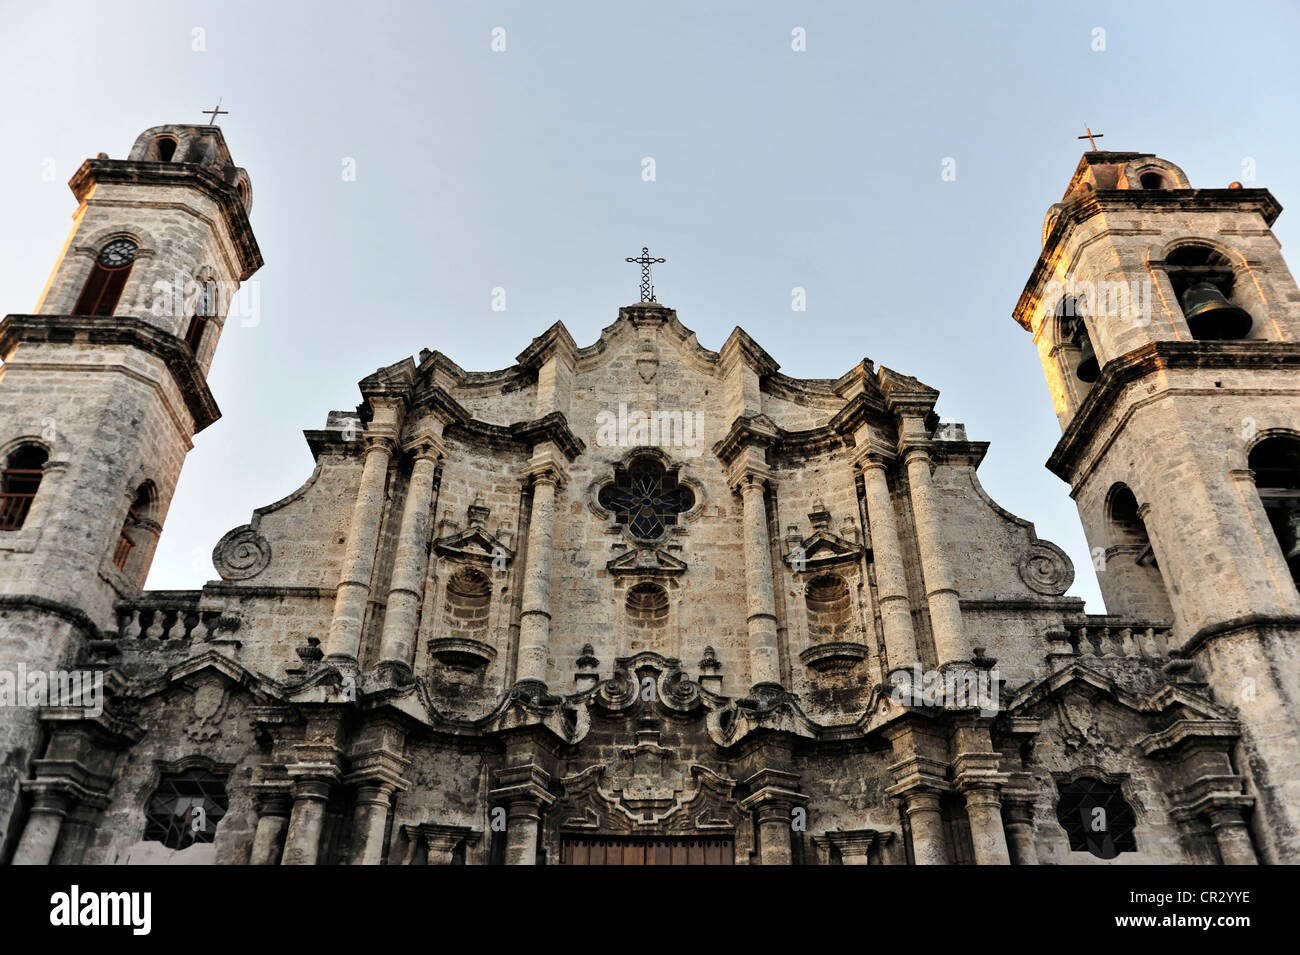 Catedral De La Habana, Havana Kathedrale, der Bau begann im Jahre 1748, Barockfassade, Plaza De La Catedral, Havanna, Kuba Stockfoto